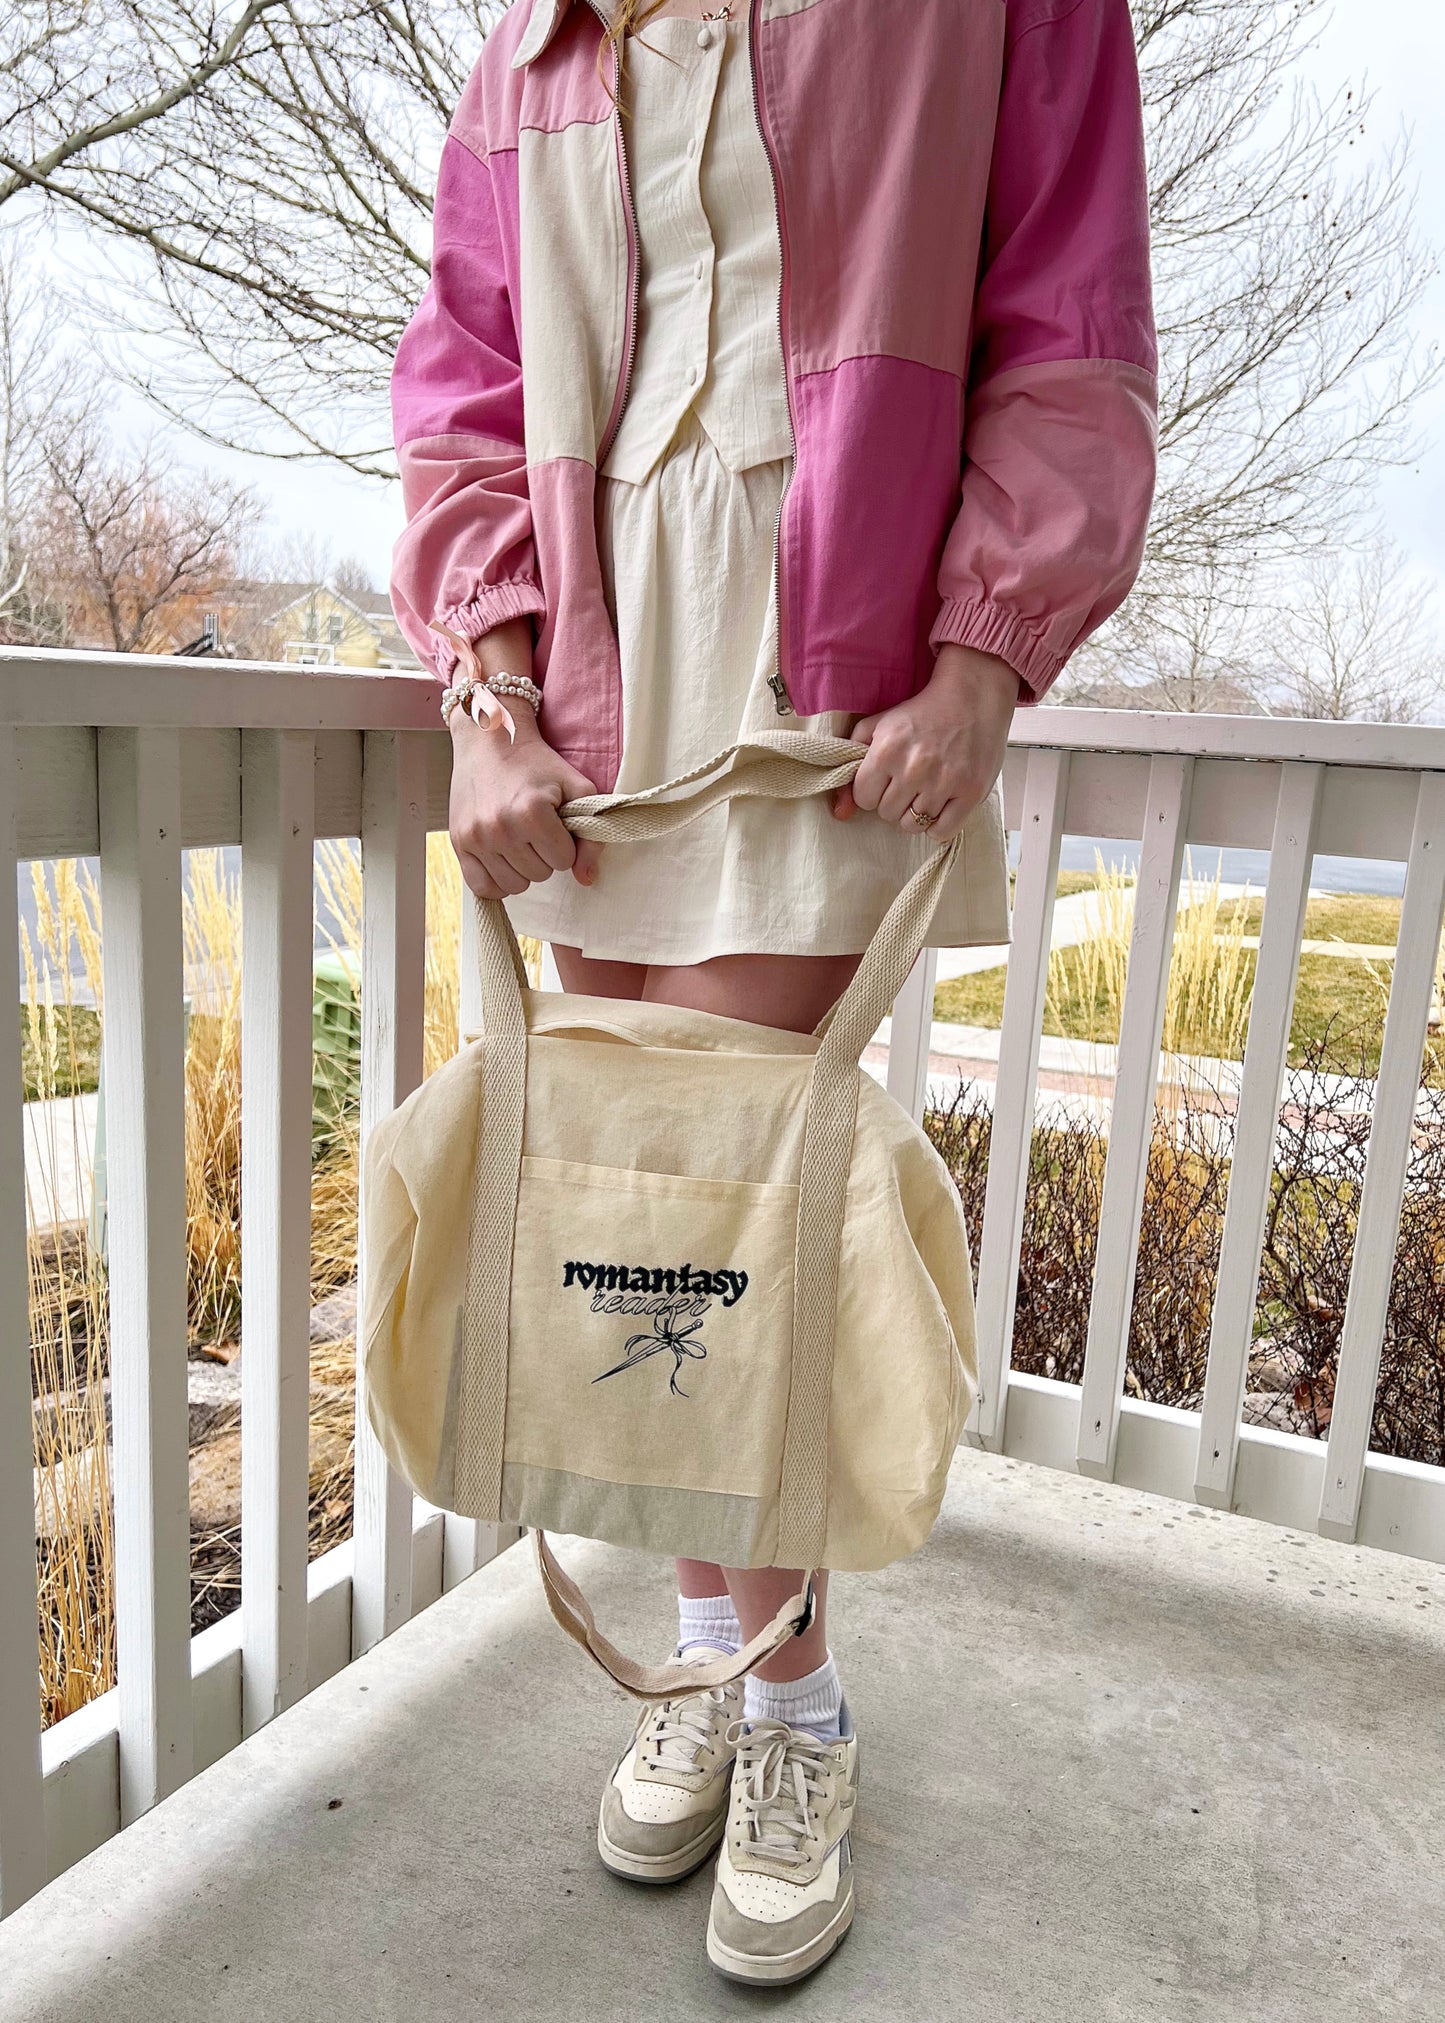 romantasy reader tote bag